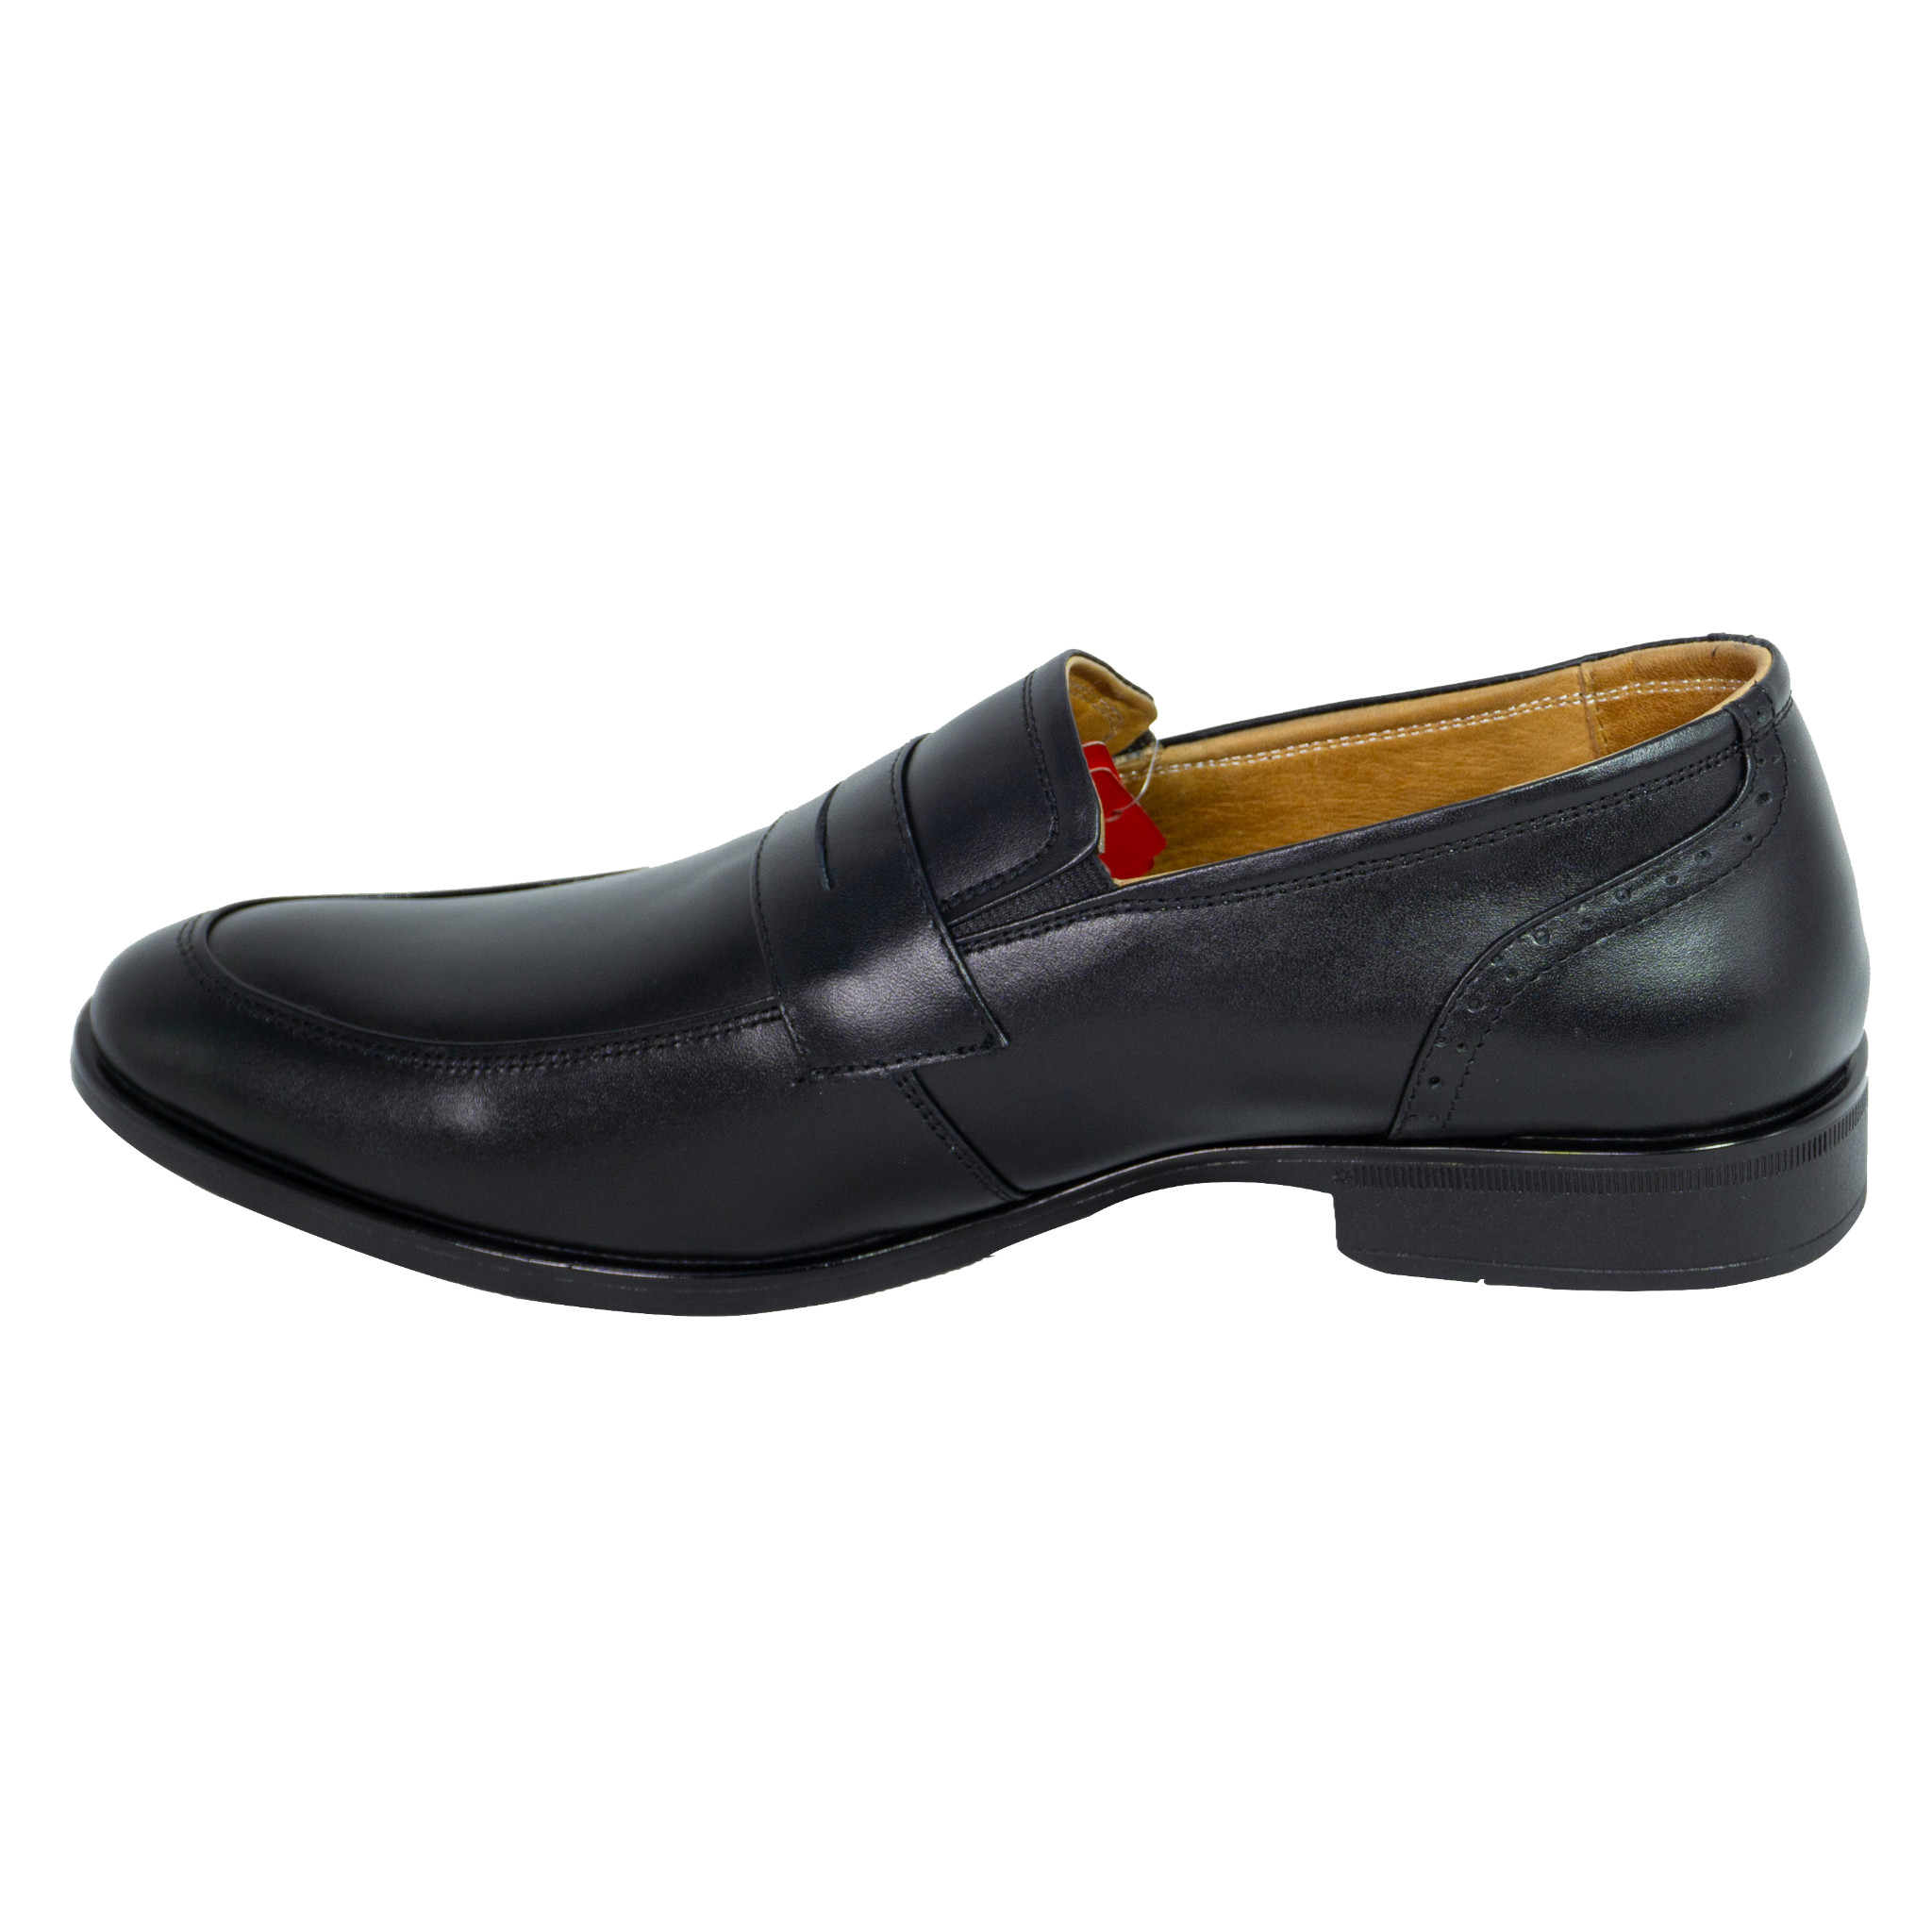 Giày tây loafer Pierre Cardin – PCMFWLH 775